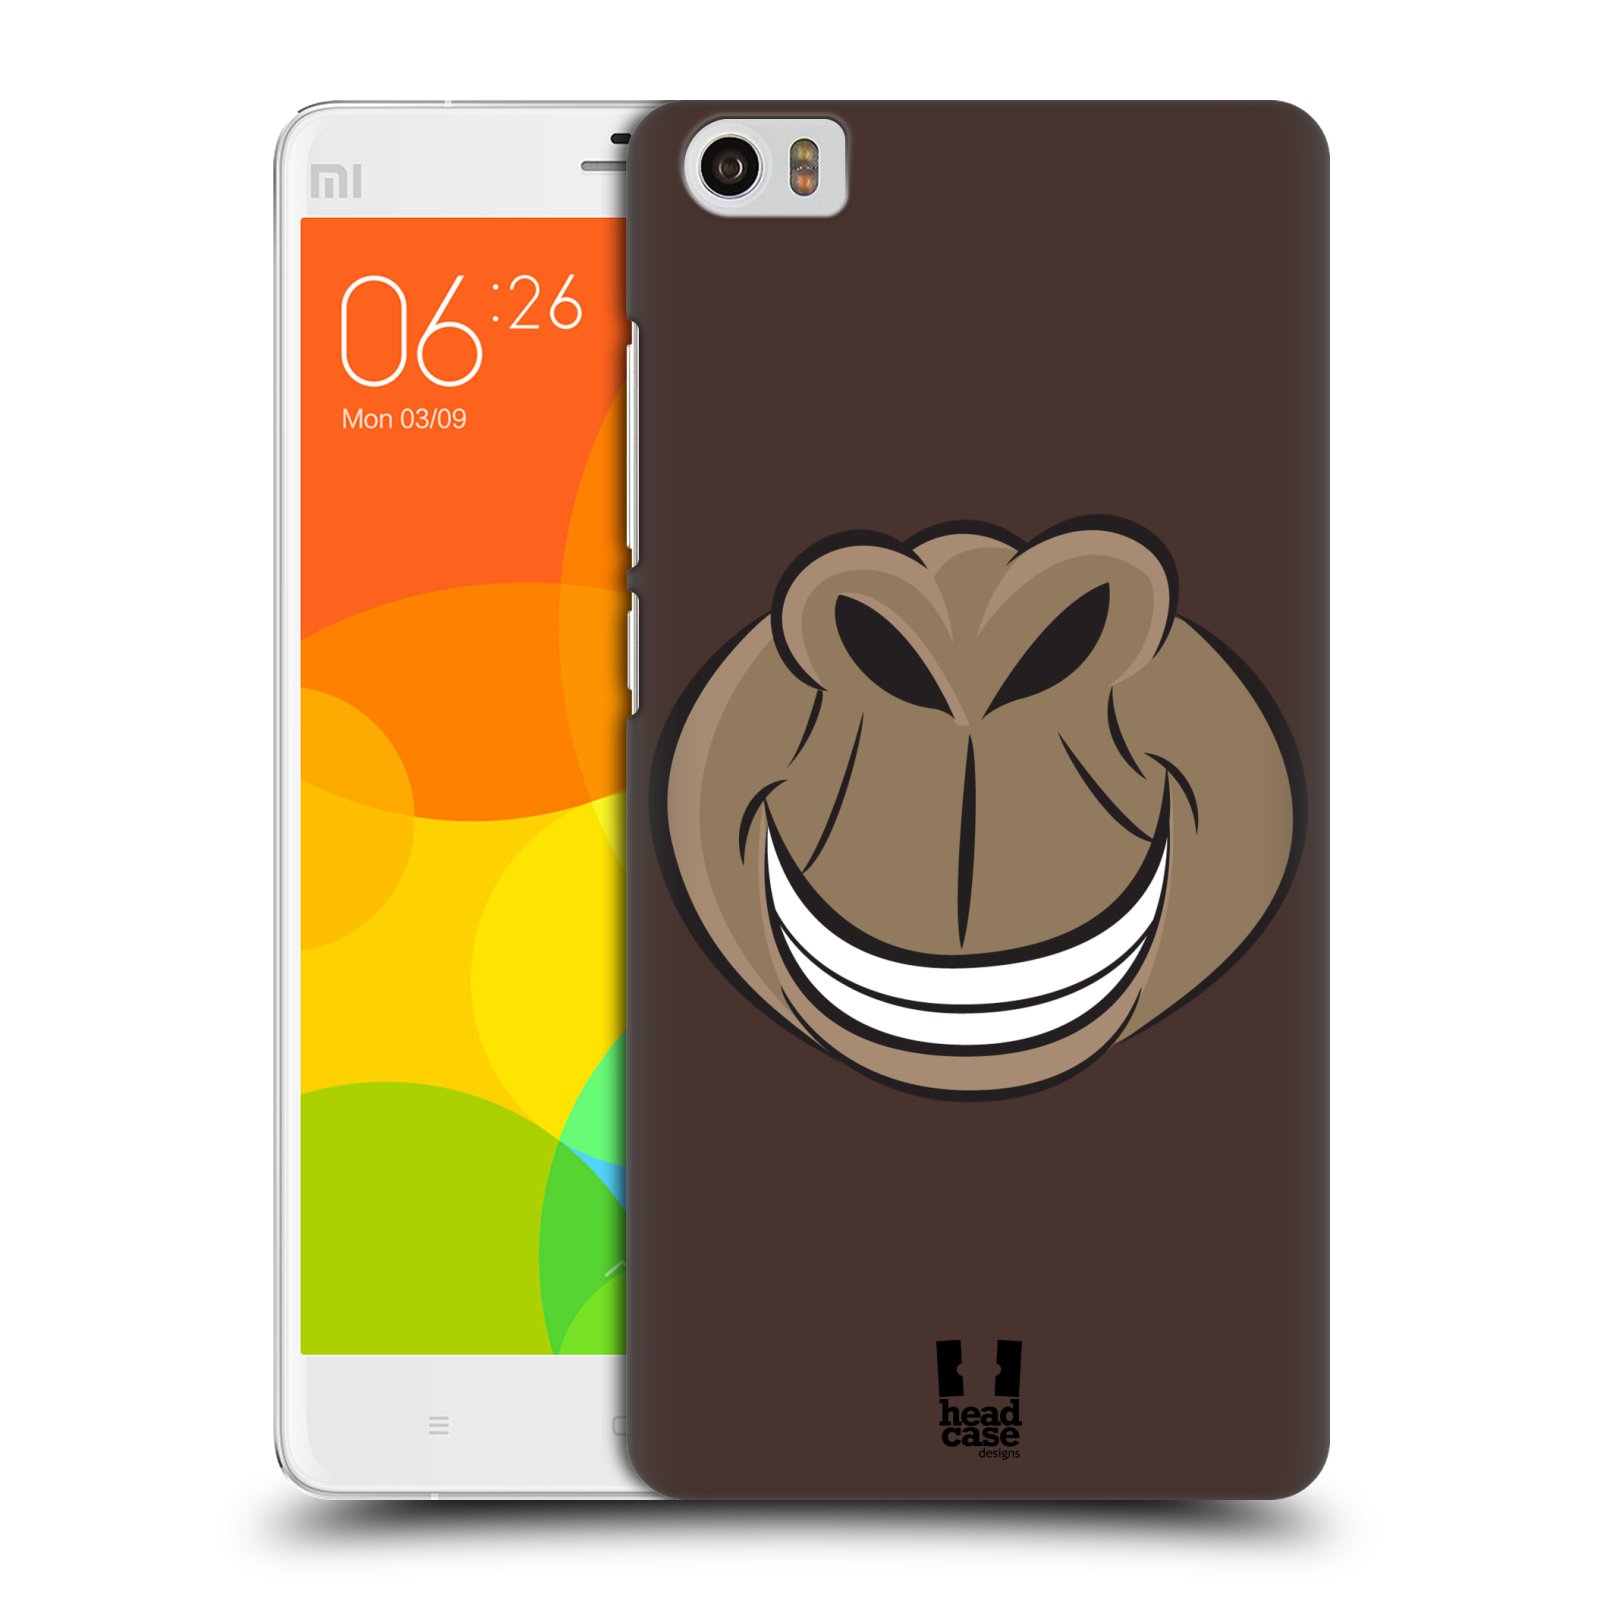 HEAD CASE pevný plastový obal na mobil XIAOMI Mi Note vzor Zvířecí úsměv opice hnědá